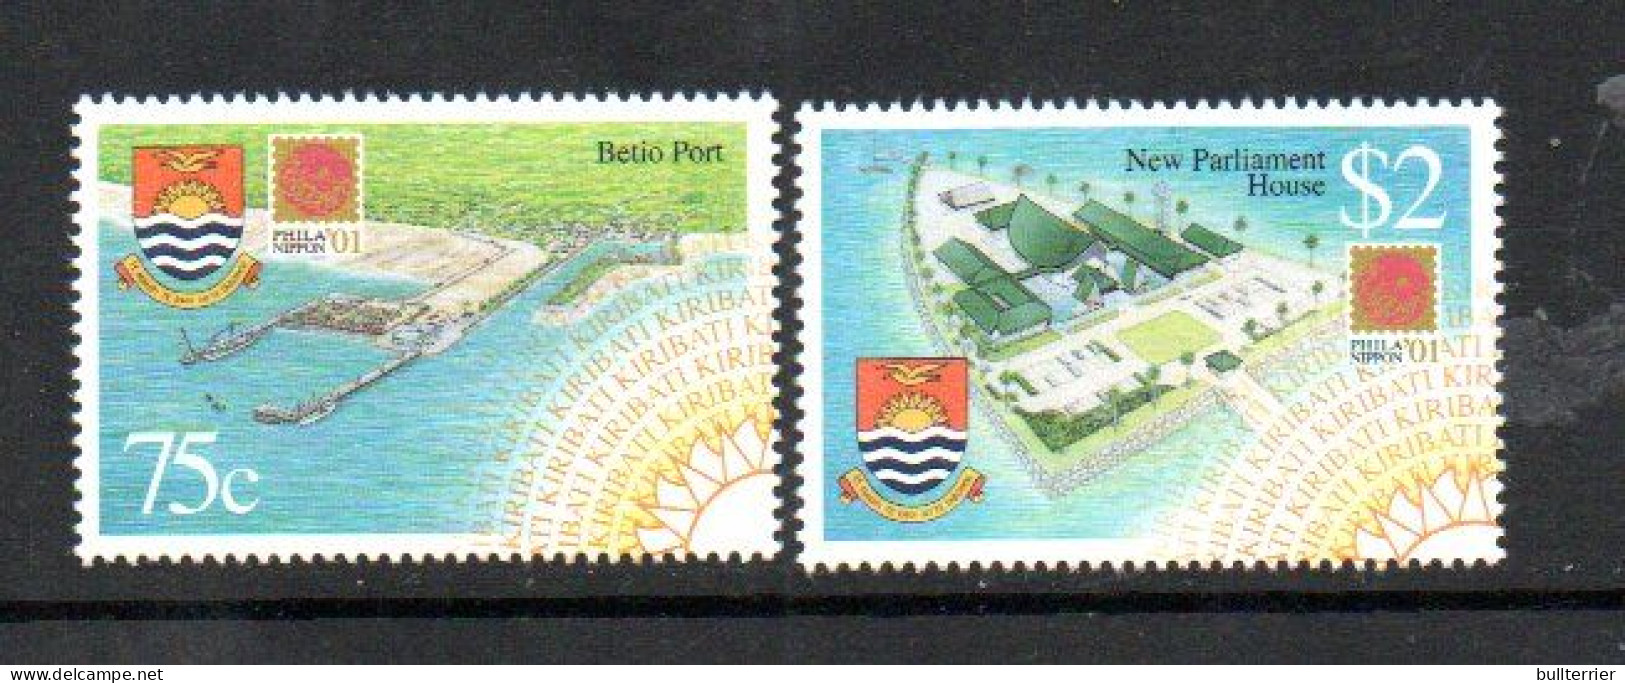 KIRIBATI - 2001 - PHILANIPPON SET OF 2 MINT NEVER HINGED - Kiribati (1979-...)